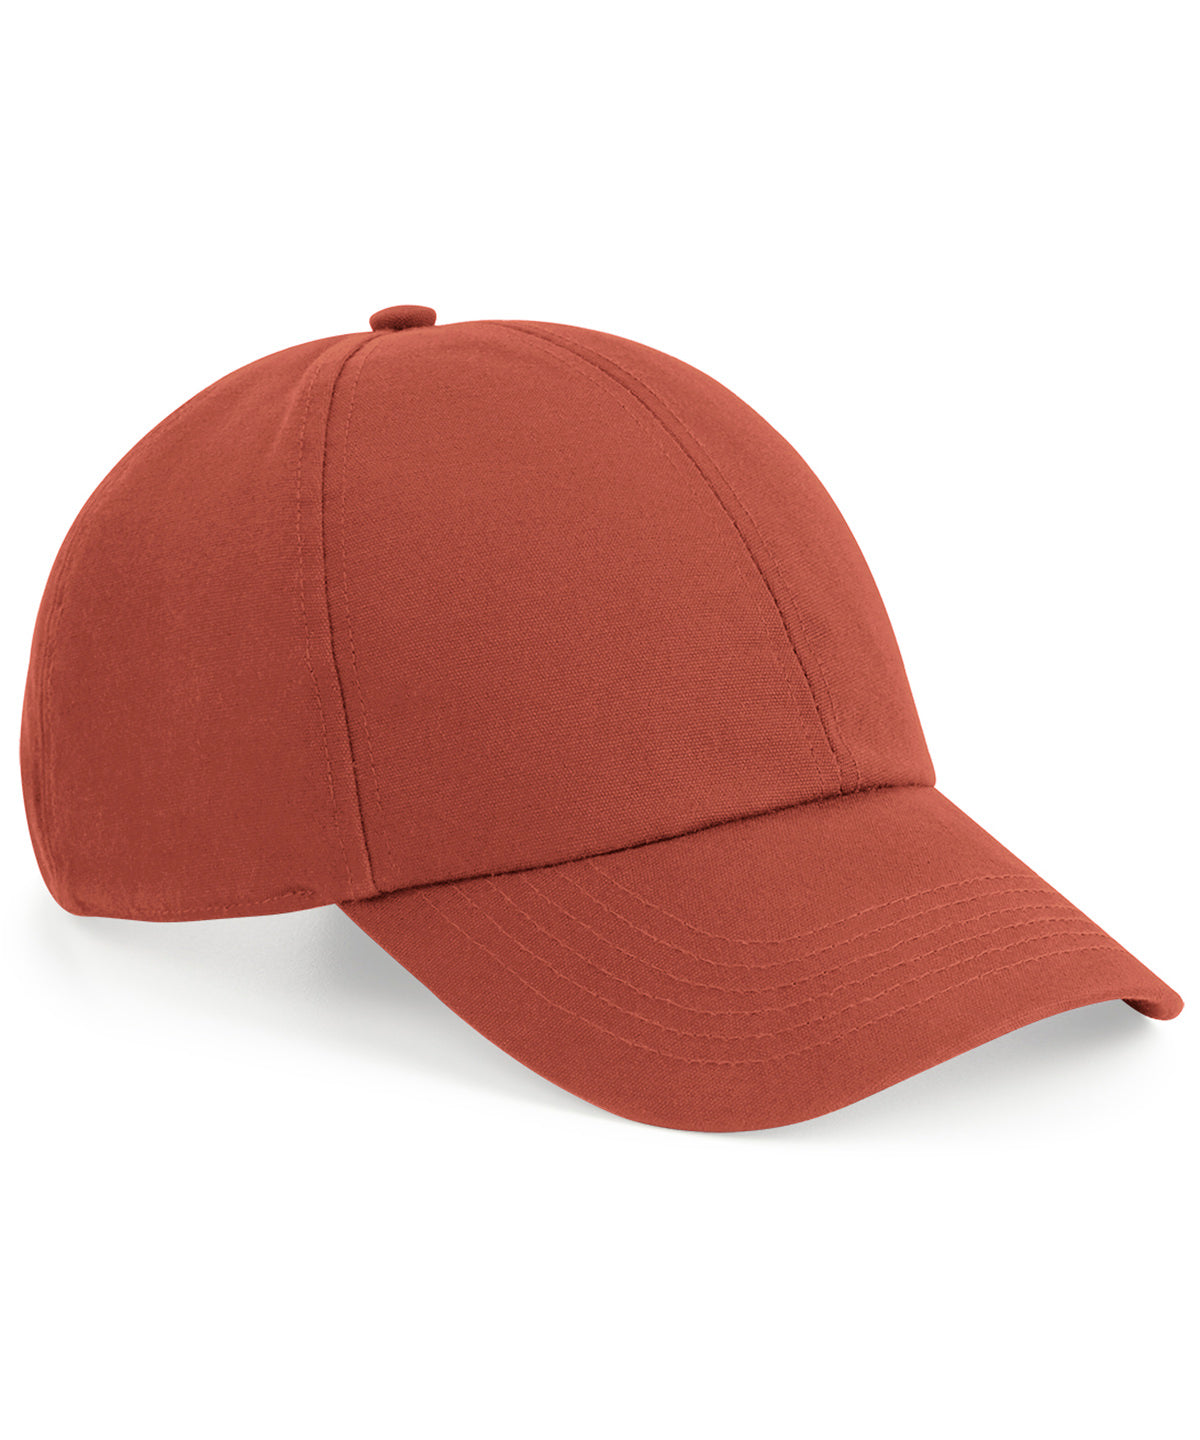 Personalised Caps - Dark Orange Beechfield Organic cotton 6-panel cap